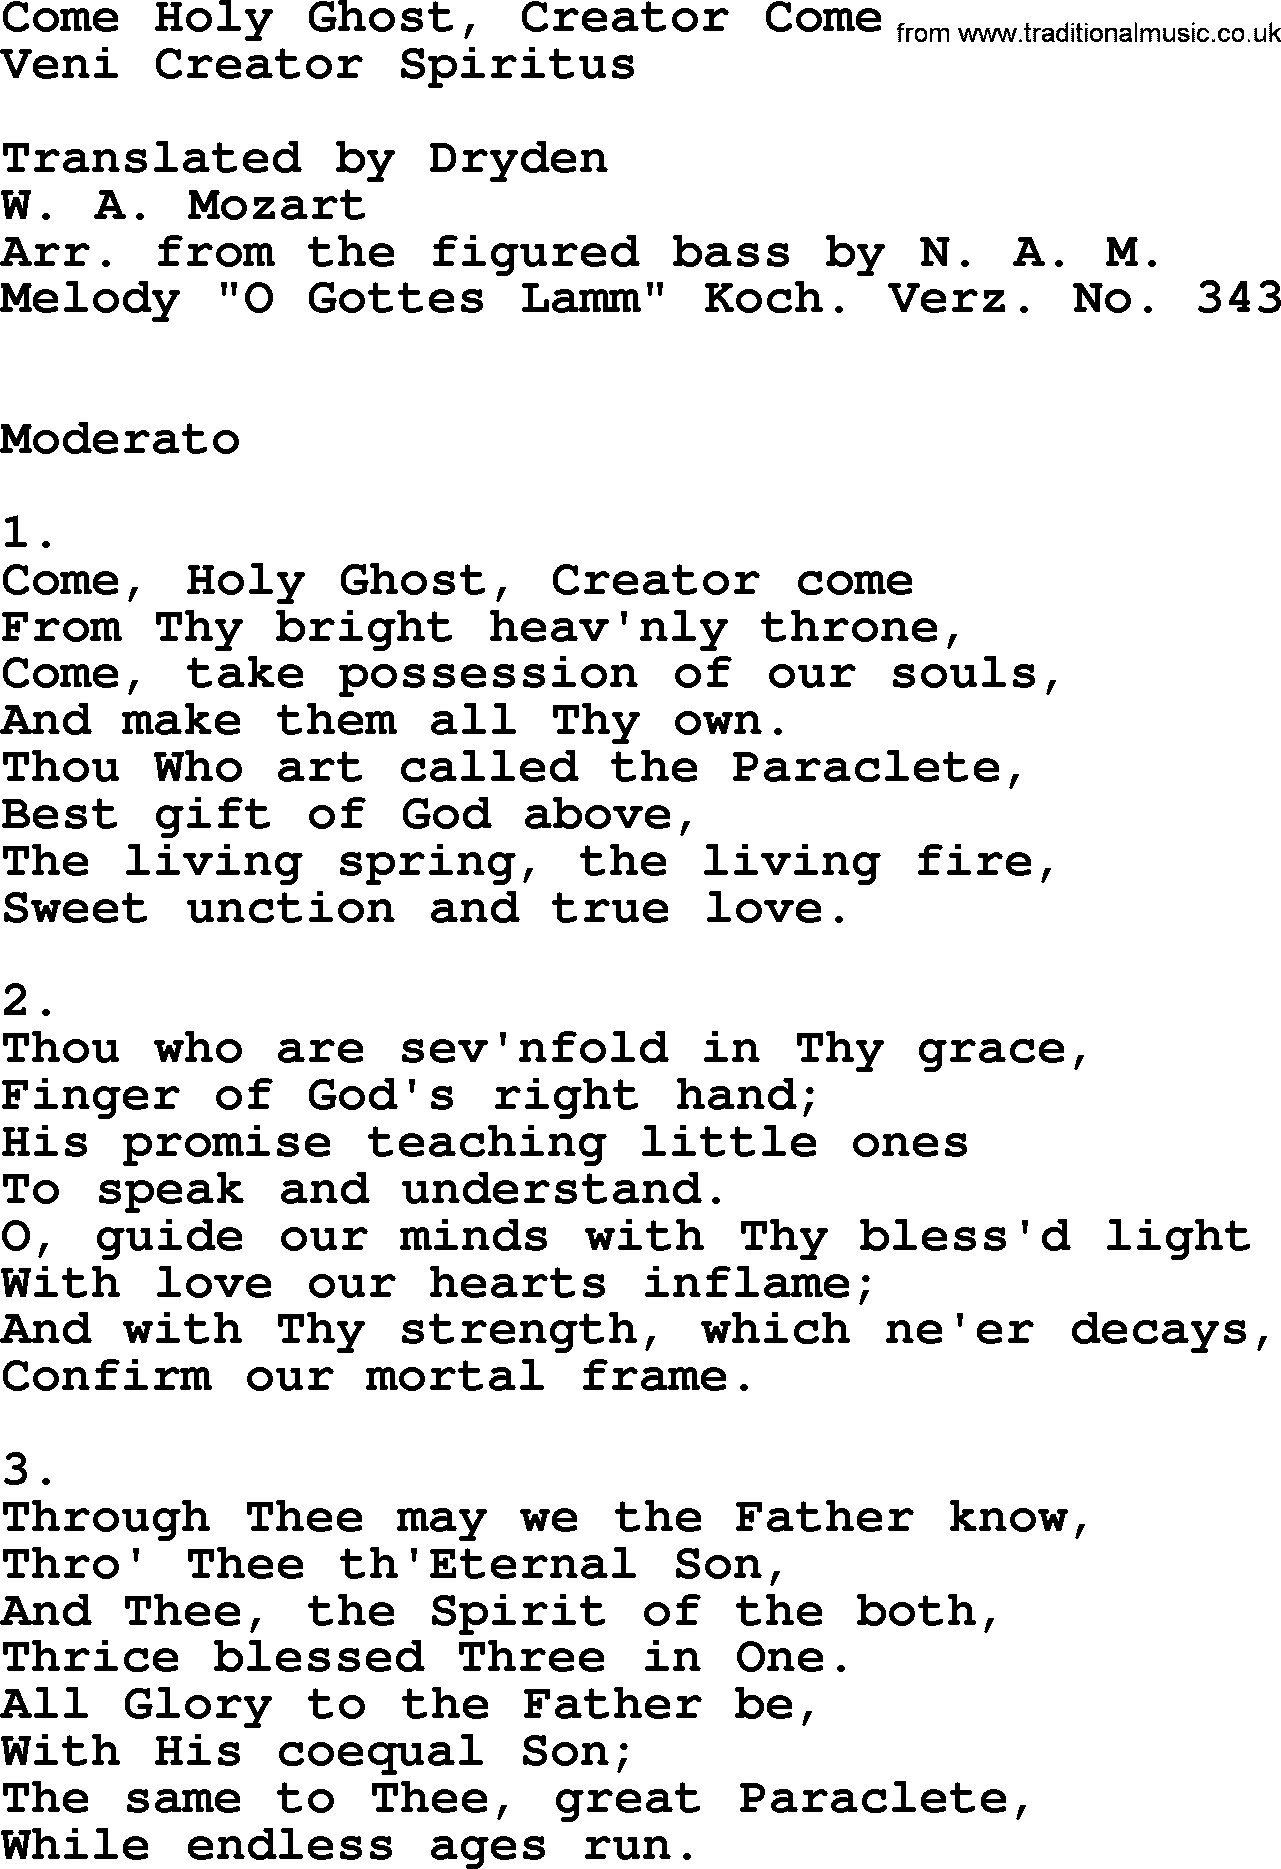 Catholic Hymn: Come Holy Ghost, Creator Come lyrics with PDF